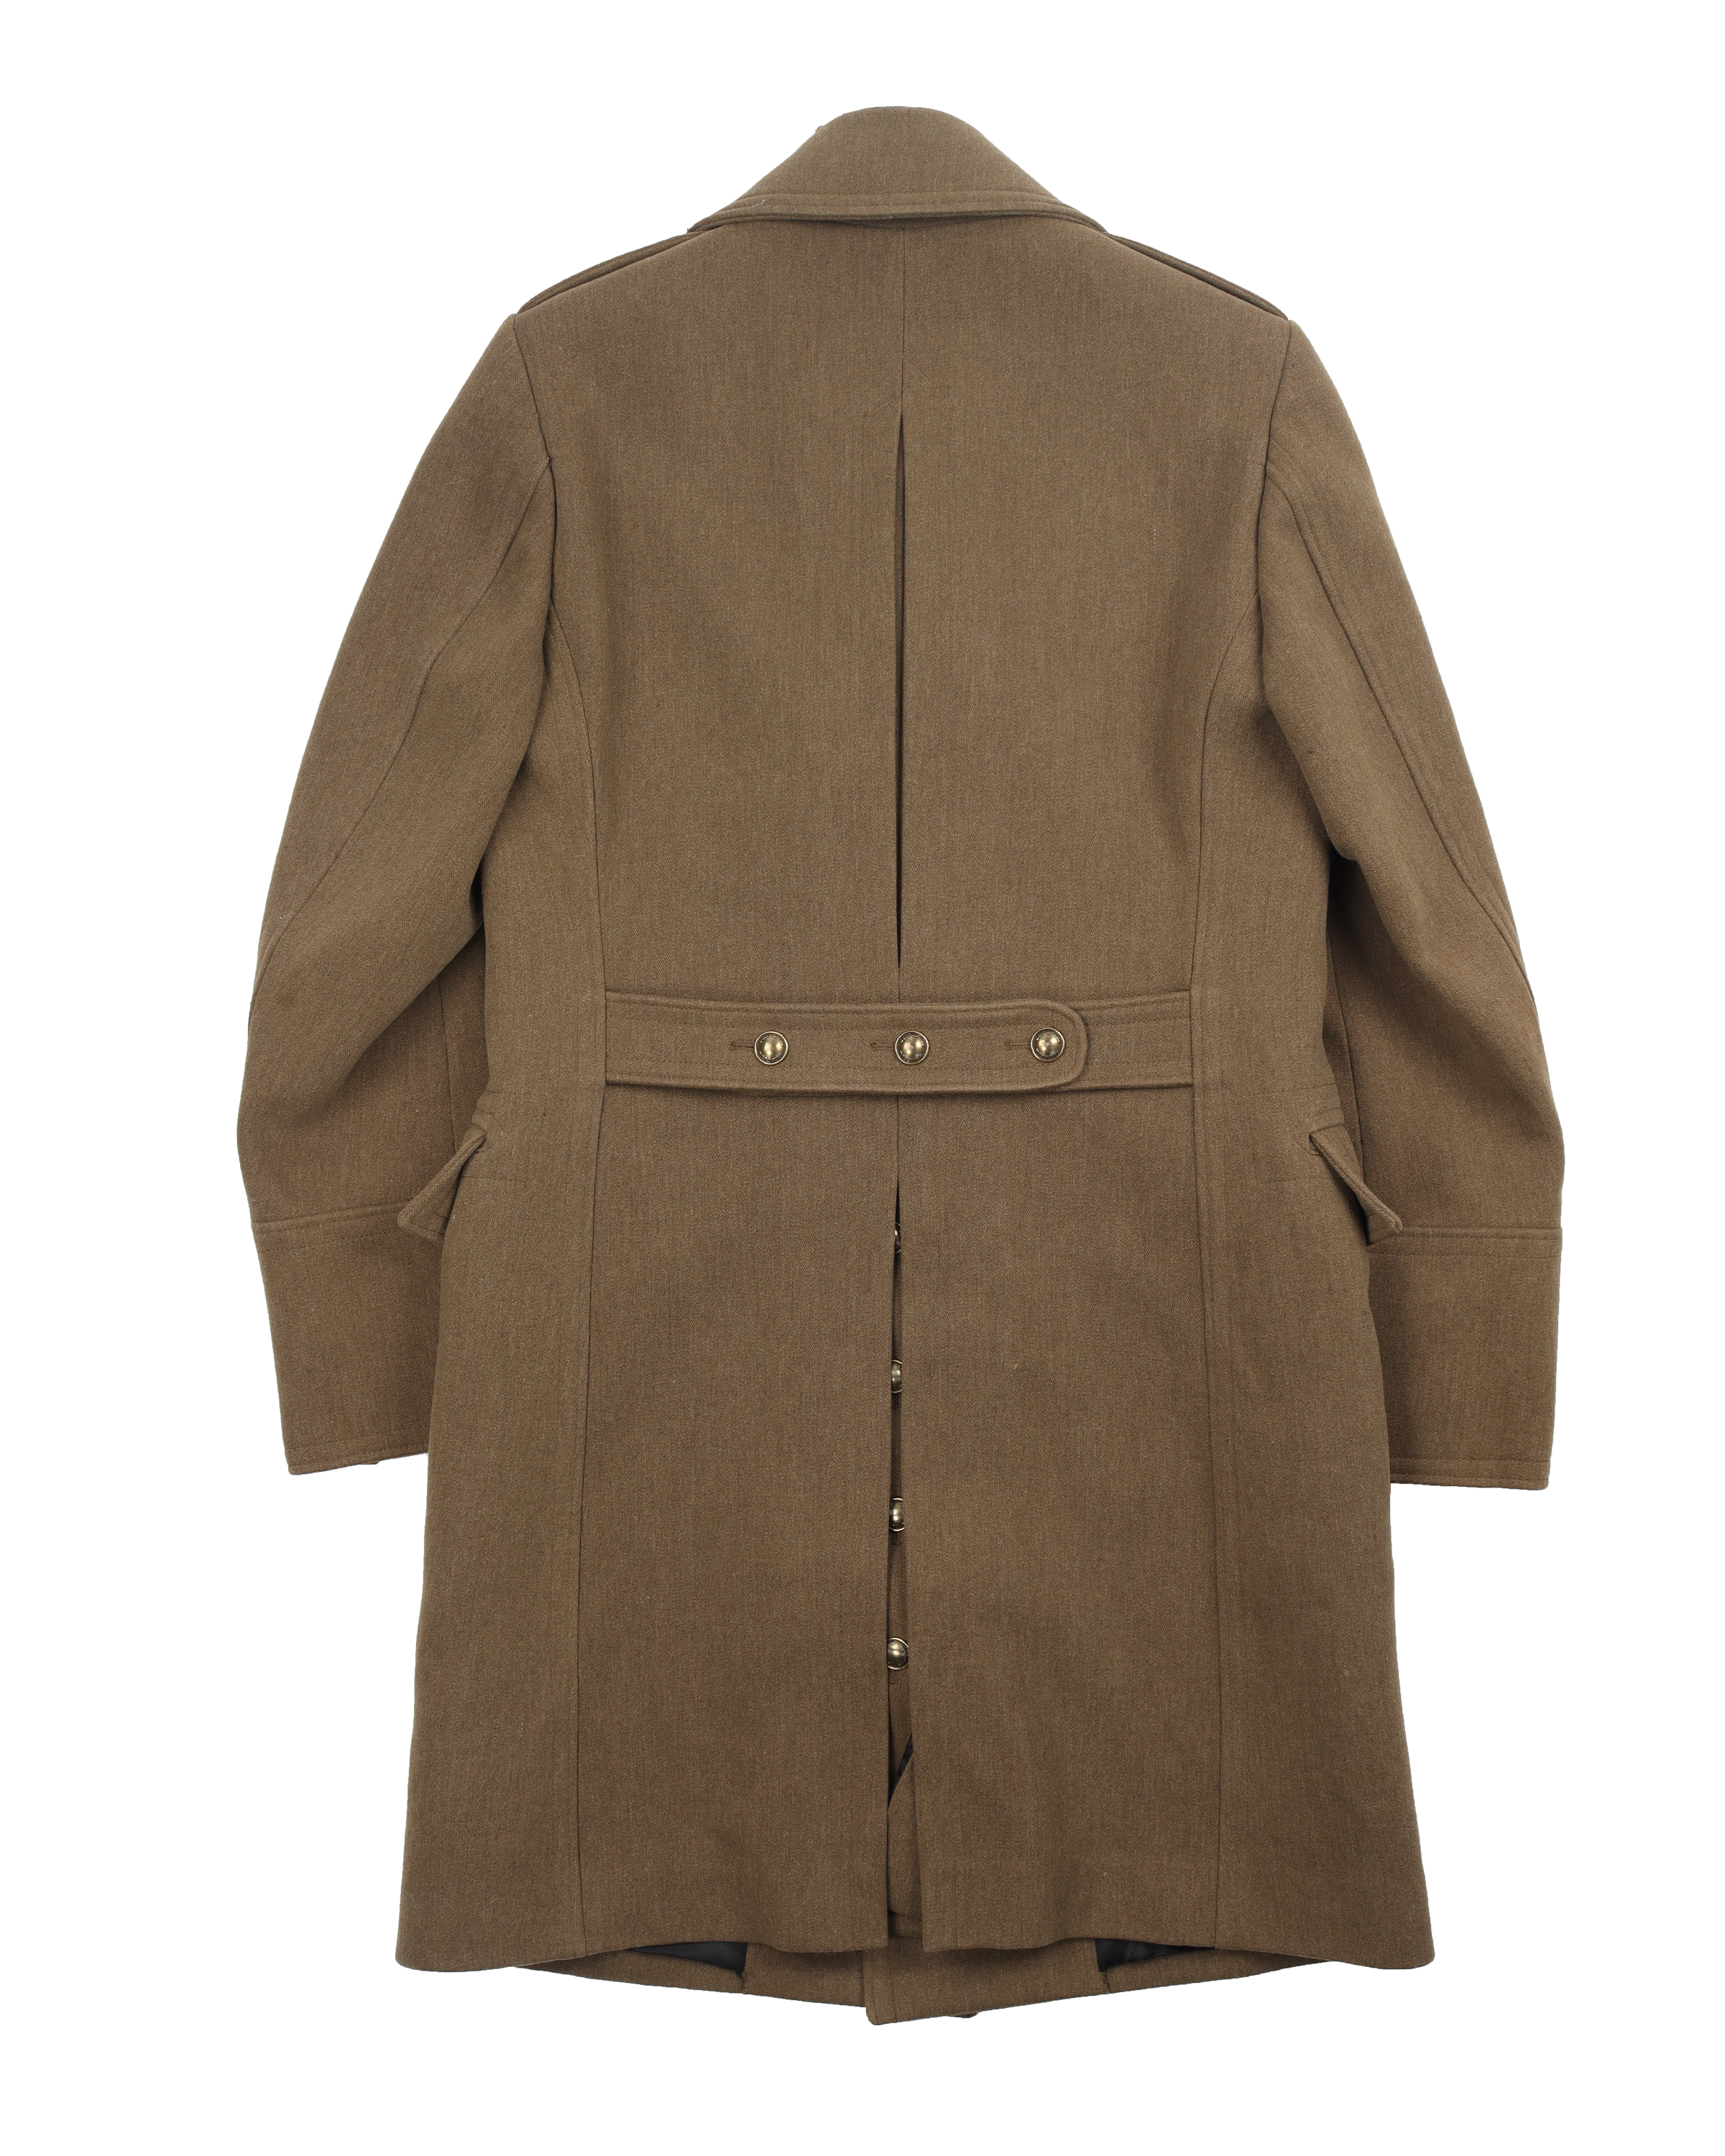 AW10 Military Wool Pea Coat